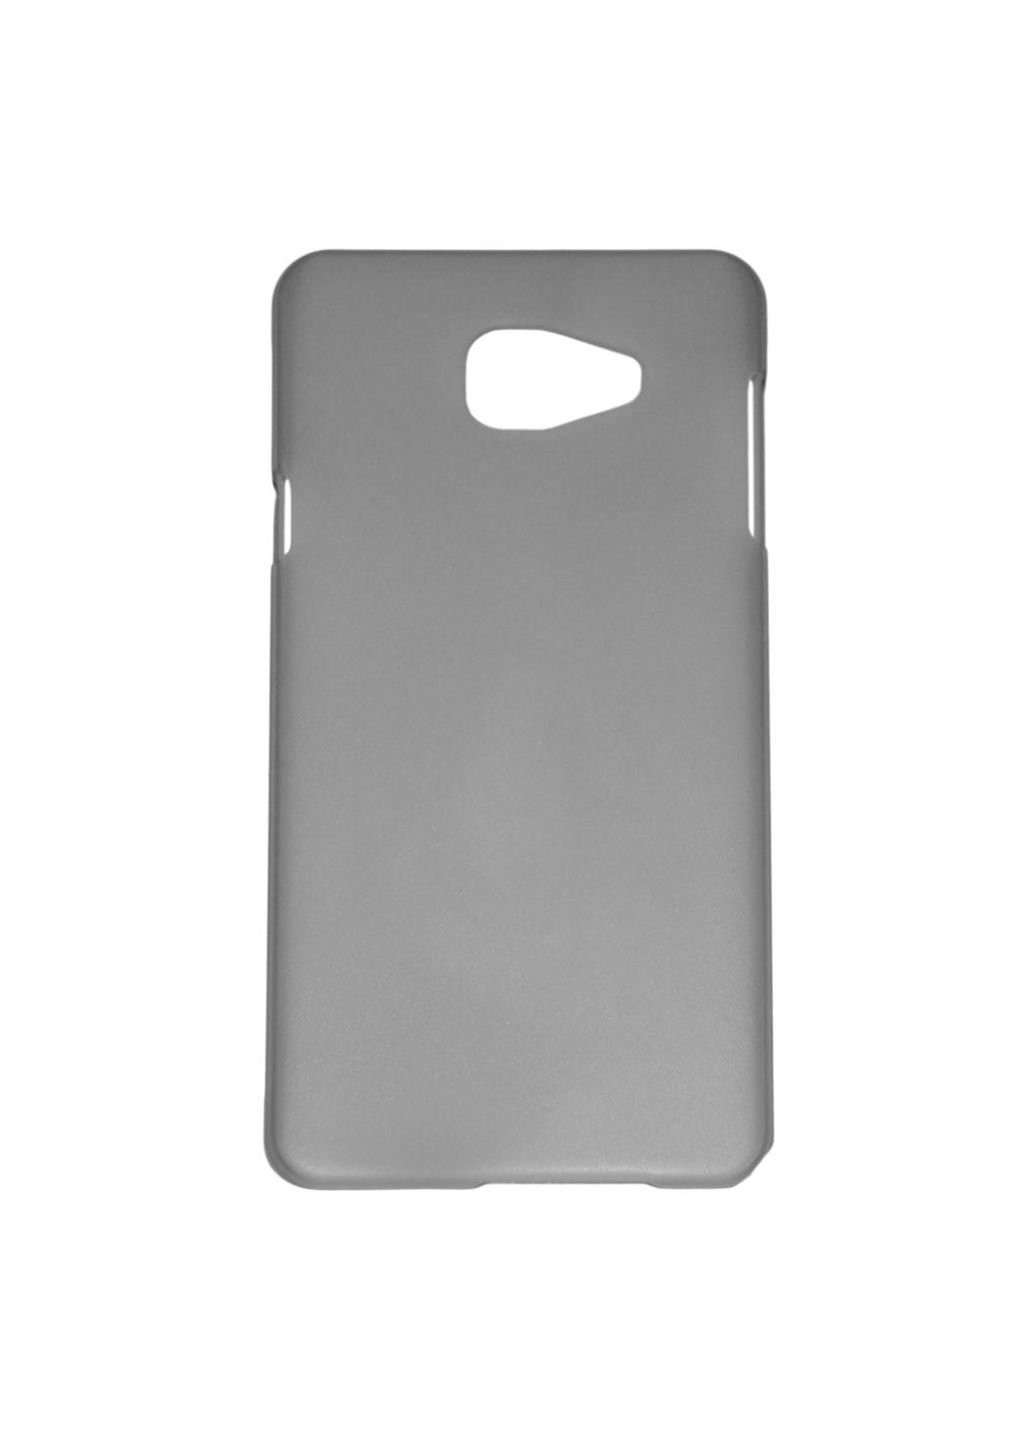 Чехол для мобильного телефона (смартфона) для Samsung A7 (A710) black (PC-matte A7 (A710) black) Pro-case (201133163)